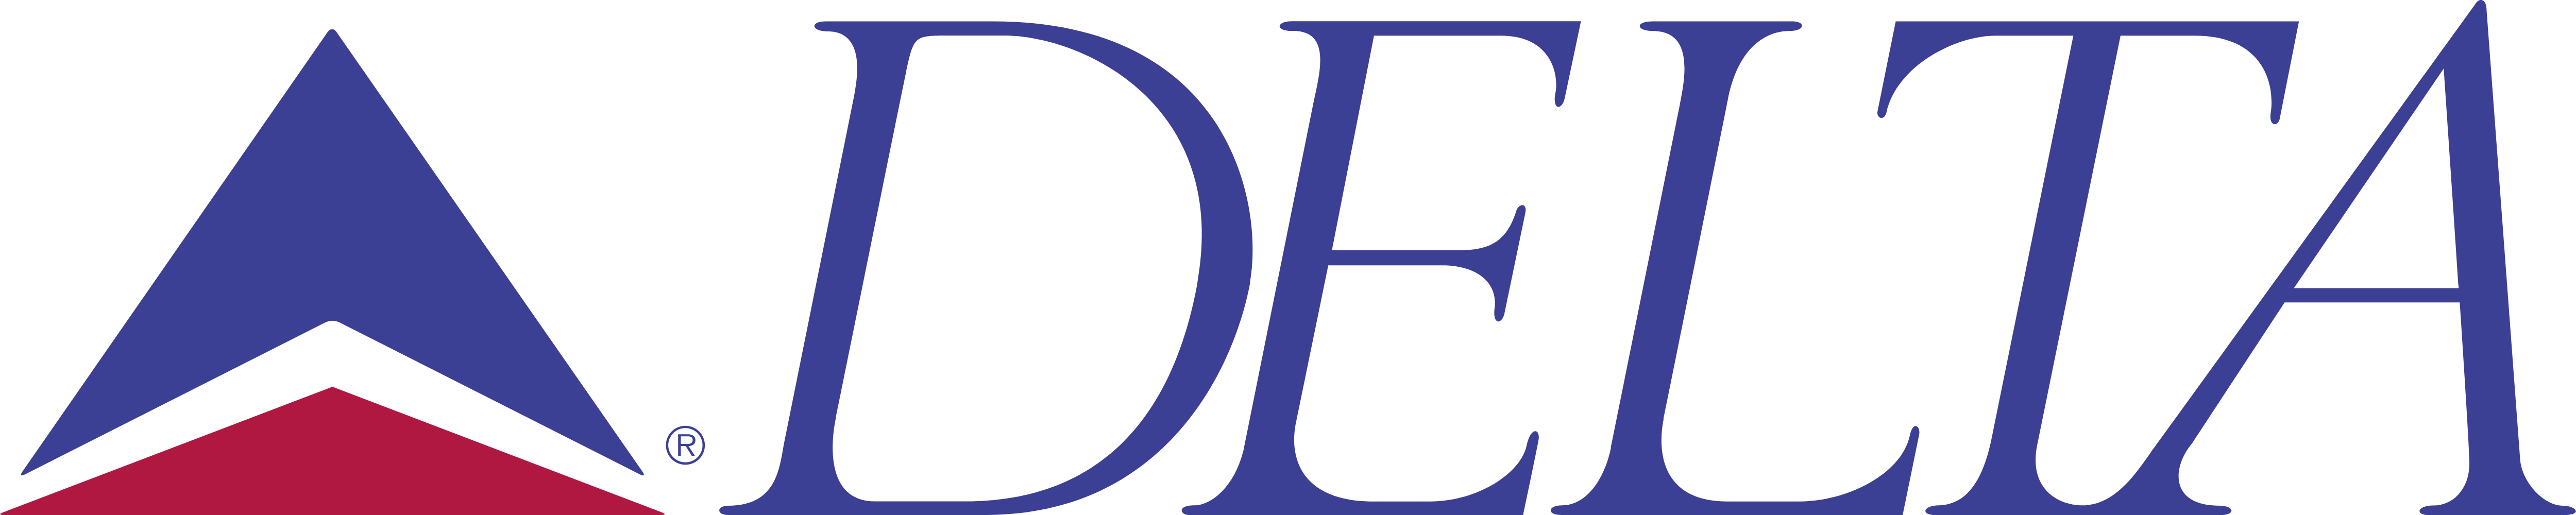 Delta Airlines Logo, Svg - Delta Air Lines (5000x1000)